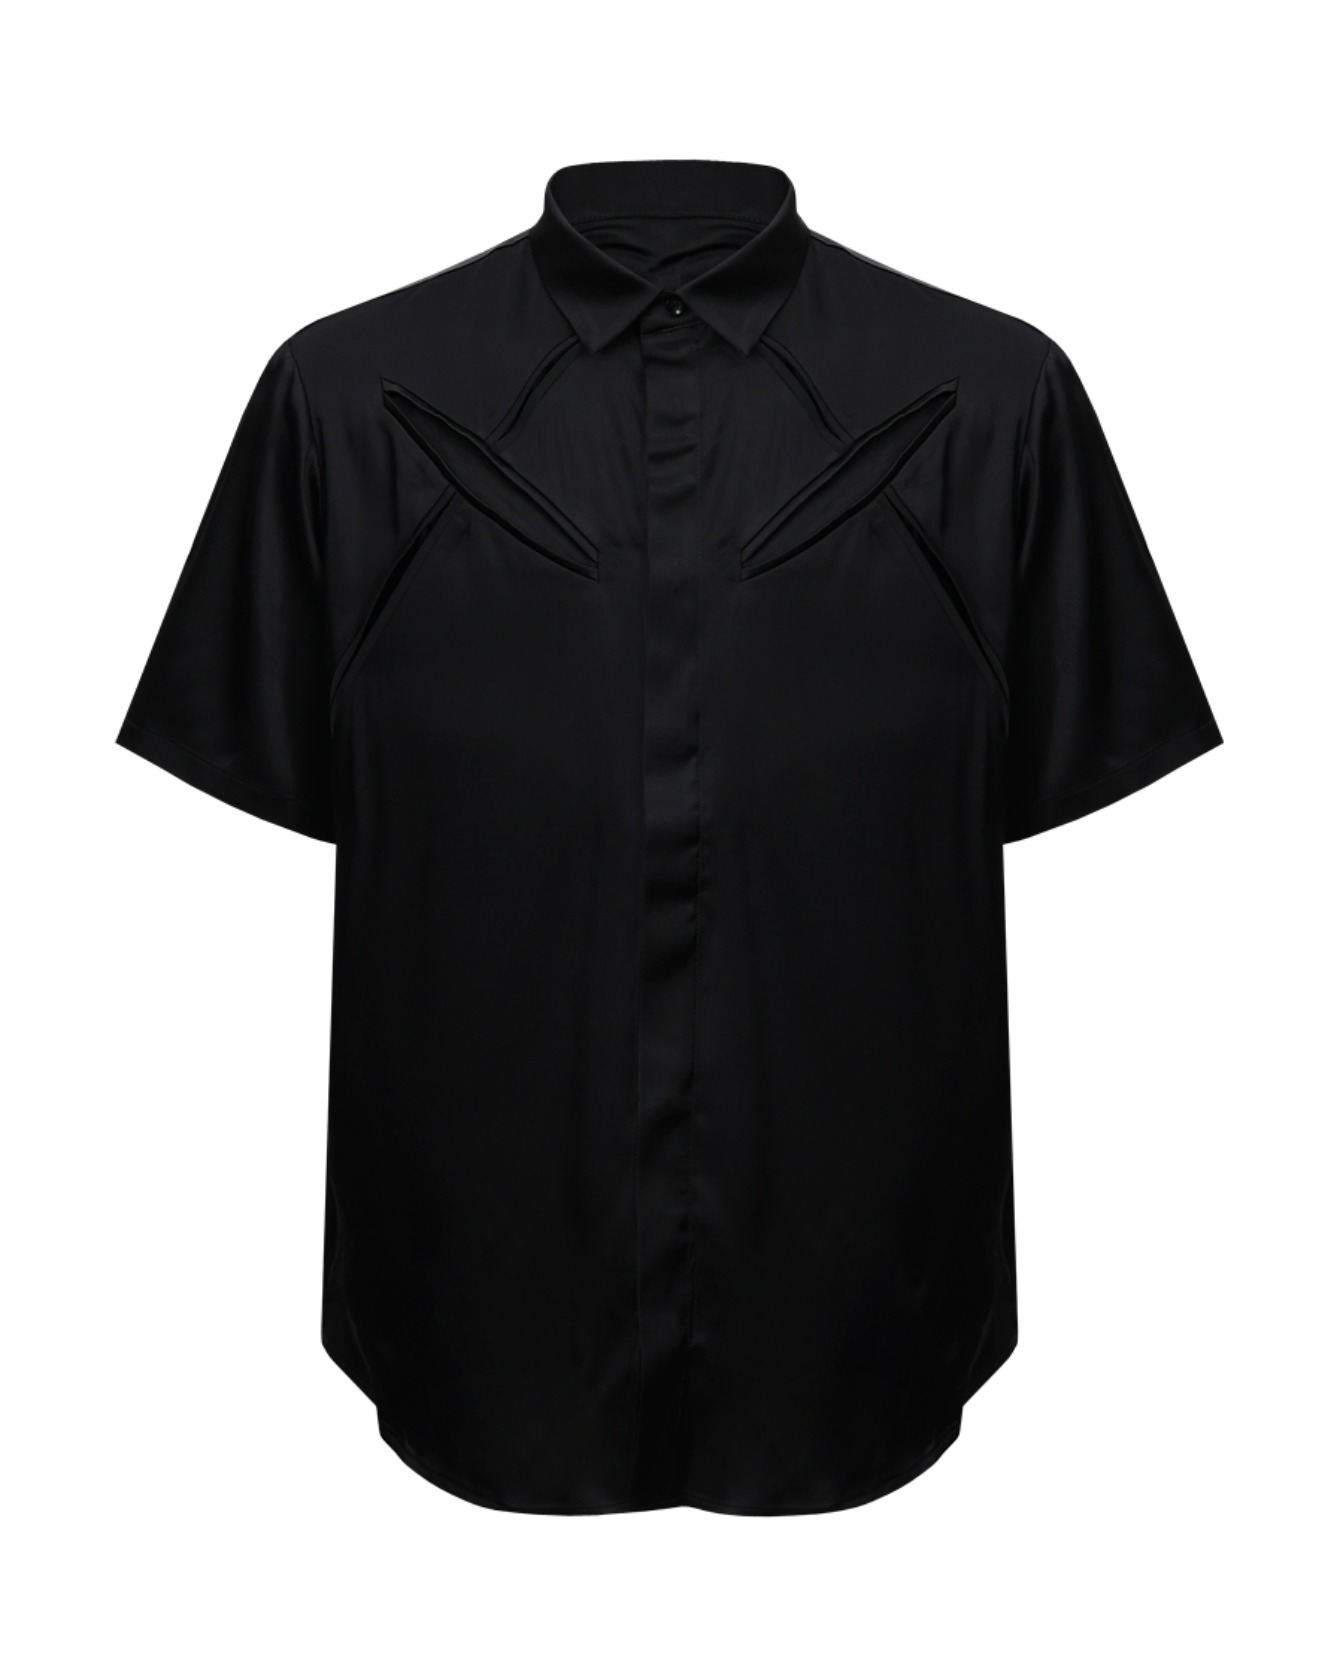 X JIP Shirts(Gleamy Black)